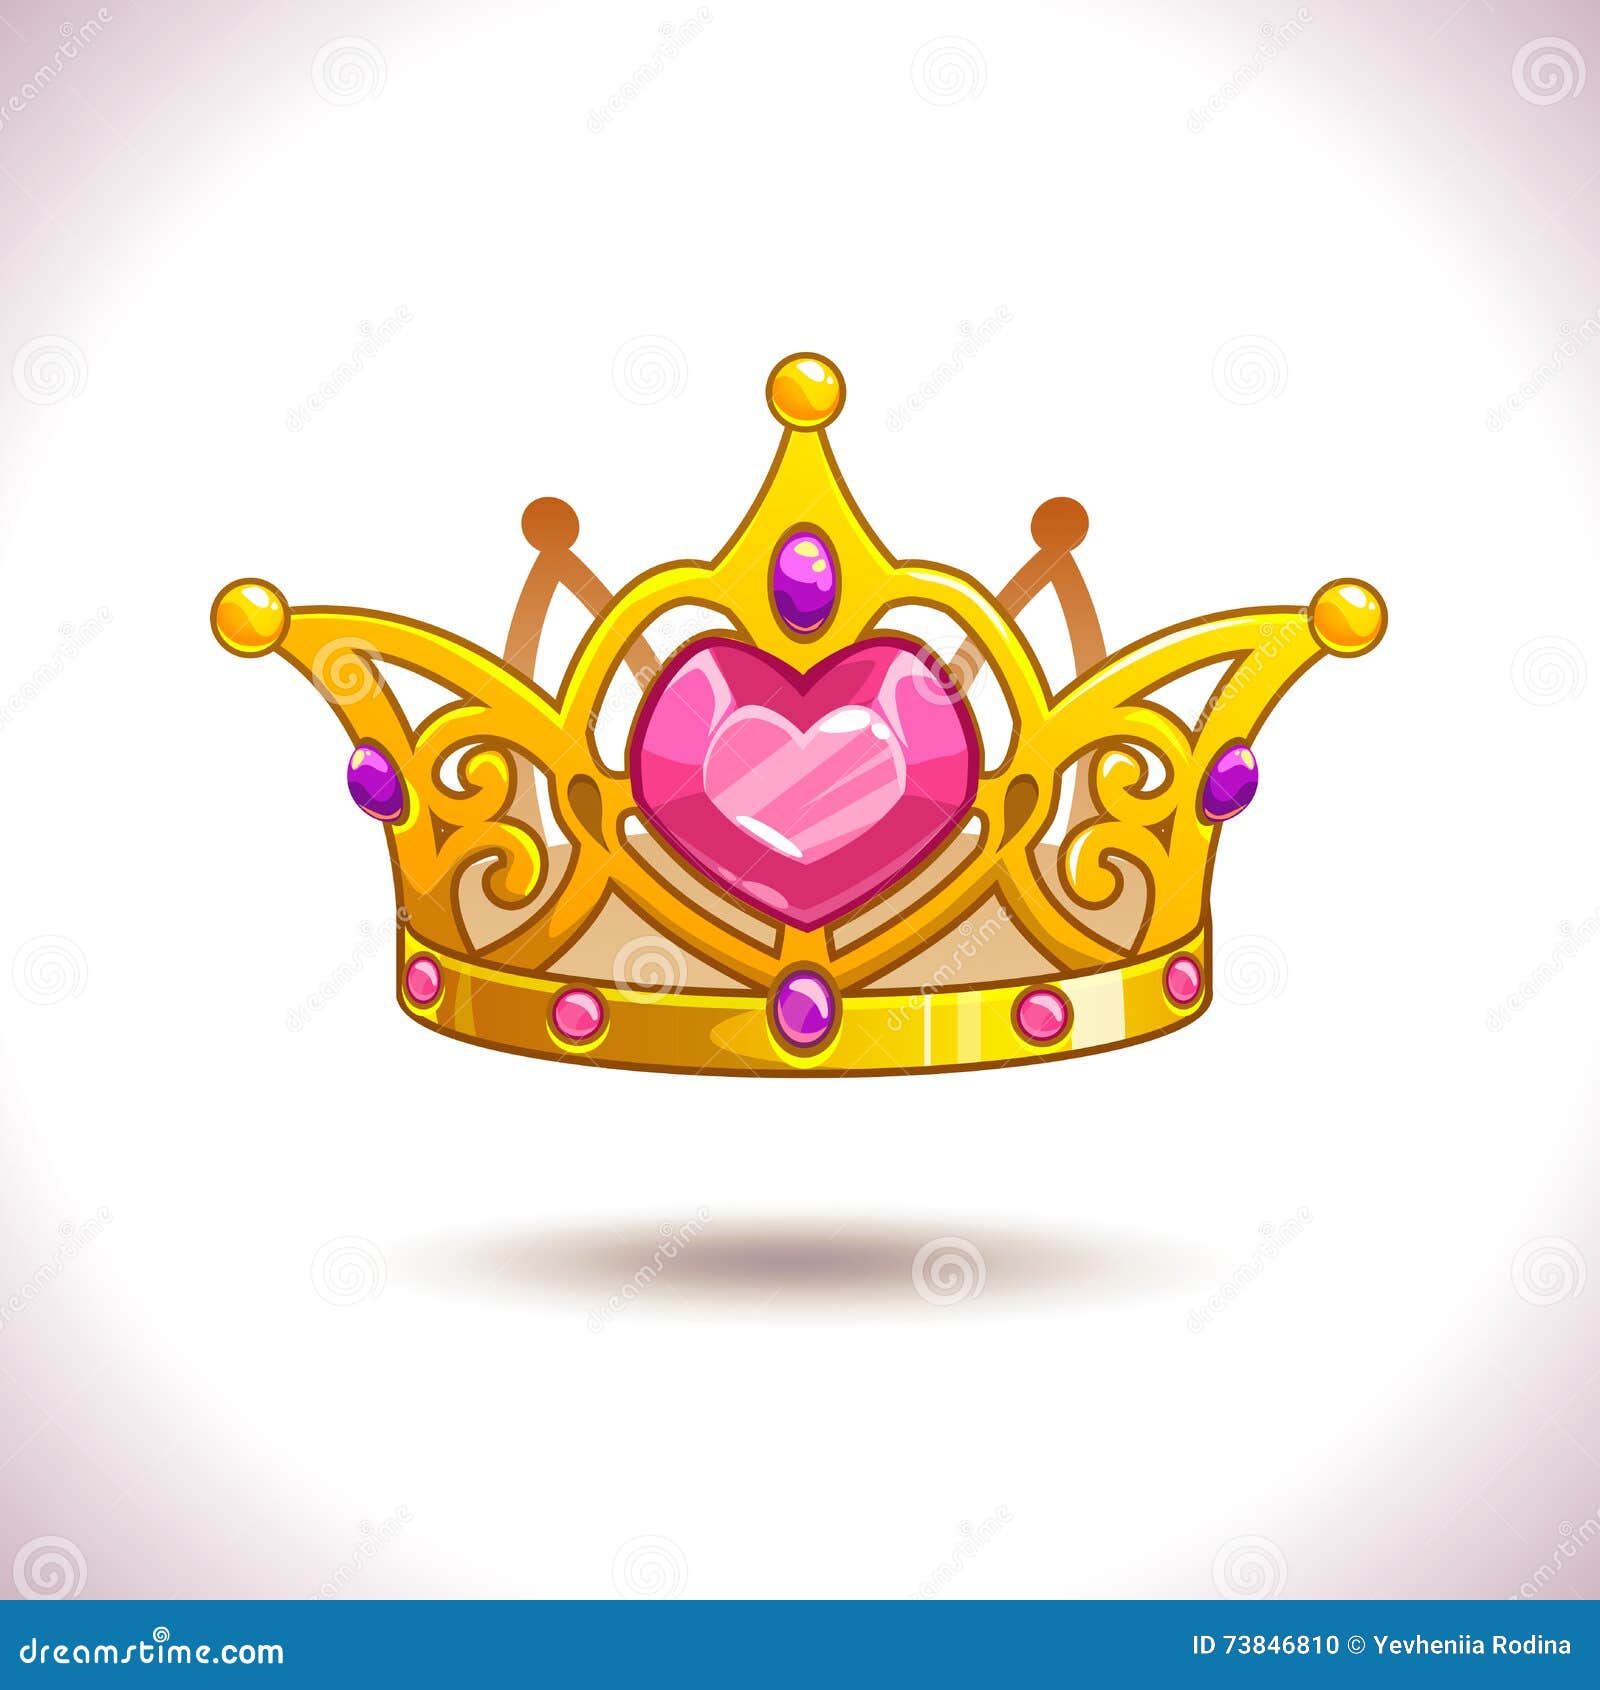 Fancy Princess Profile And Royal Symbols Illustration Royalty-Free